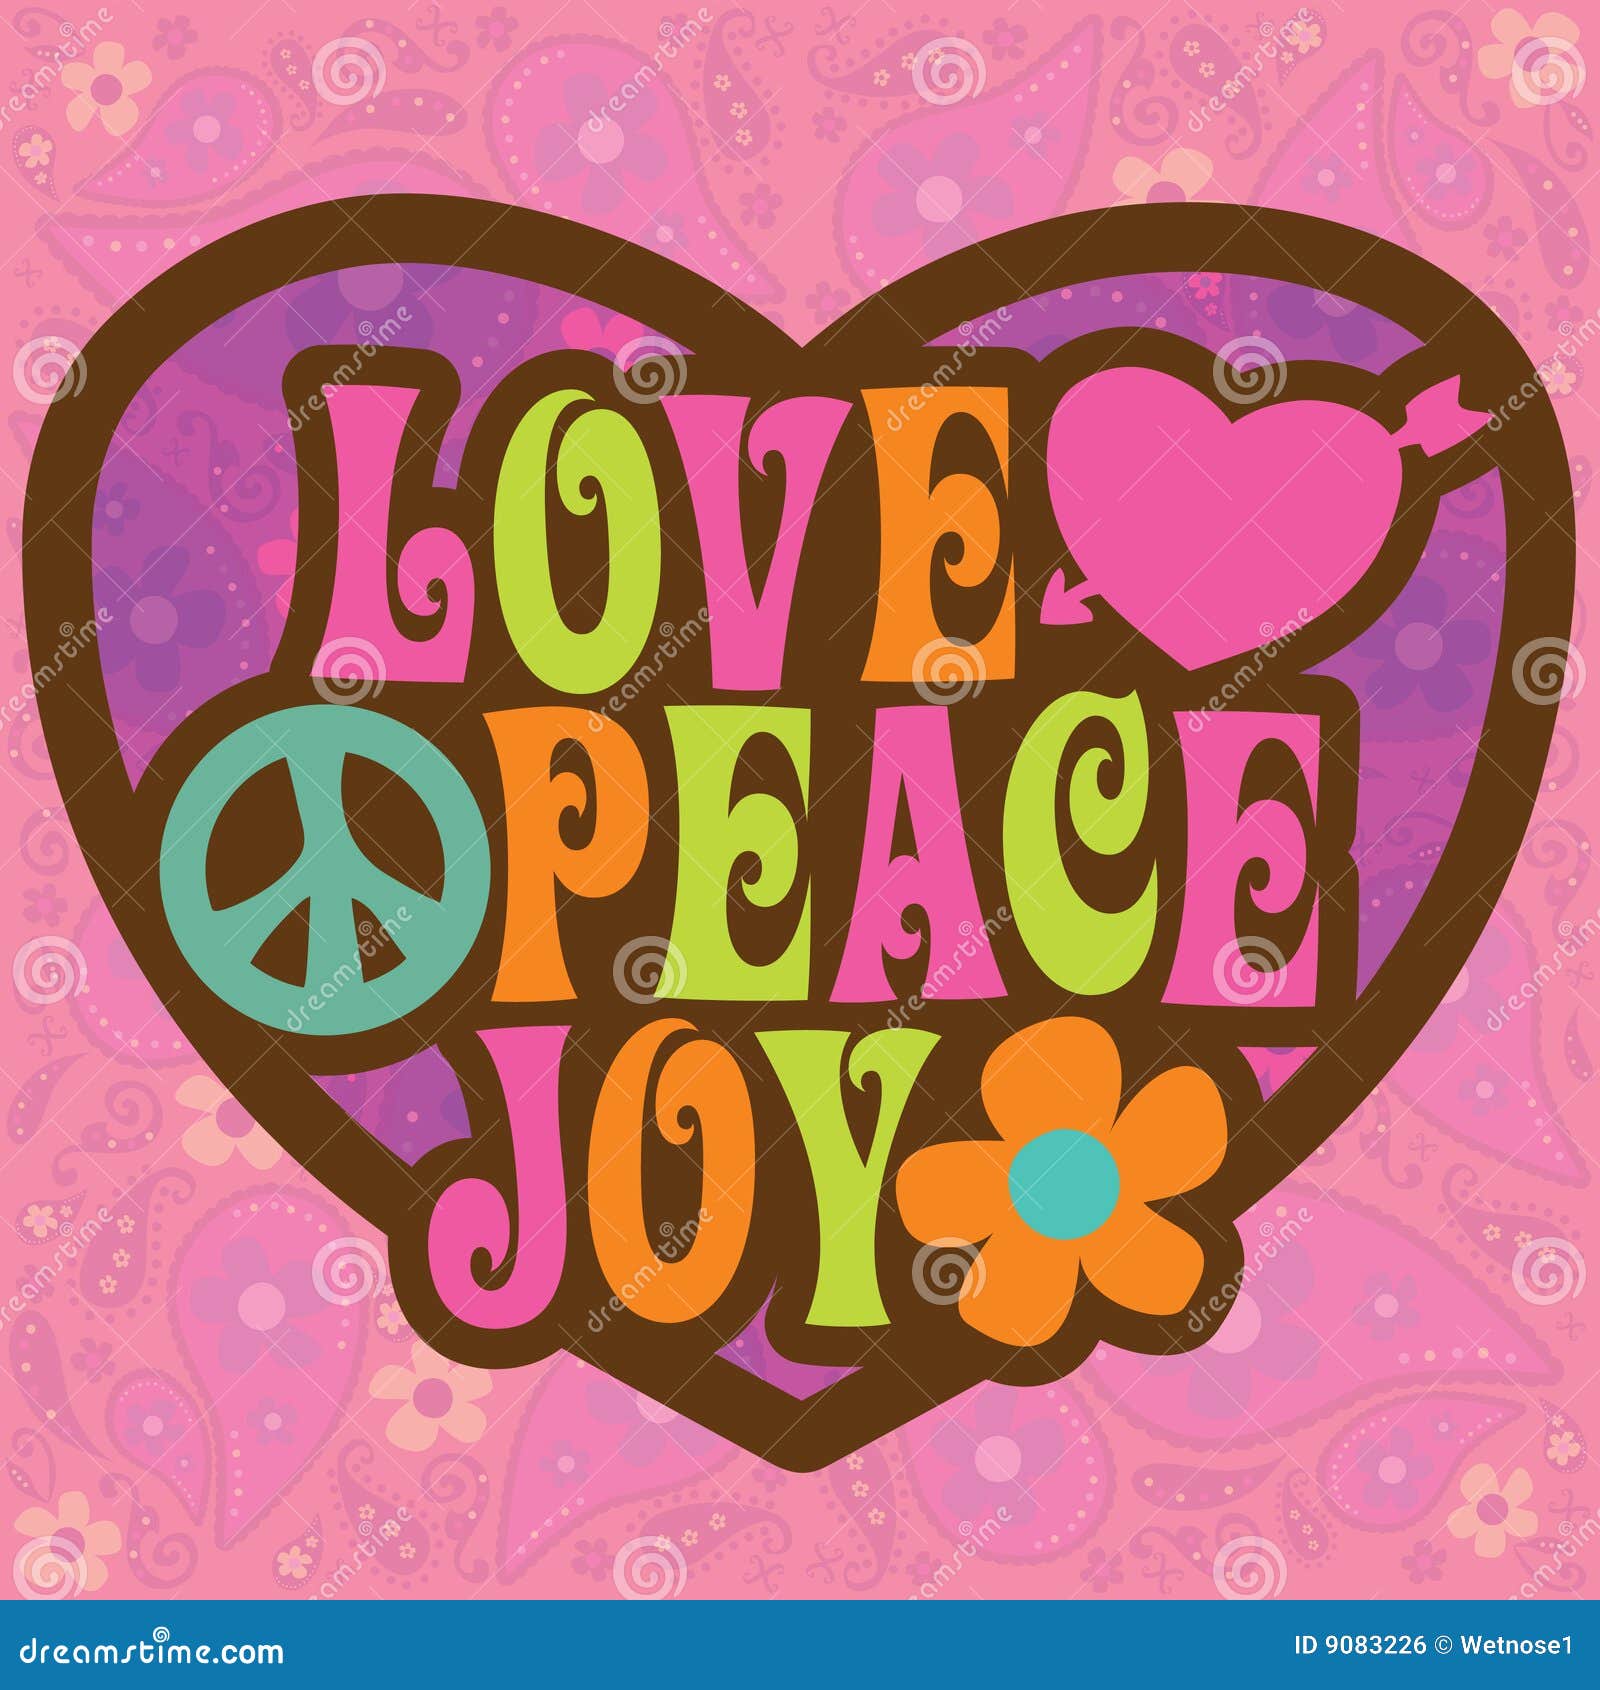 70s Love Peace Joy Illustration Stock Vector - Illustration of ...